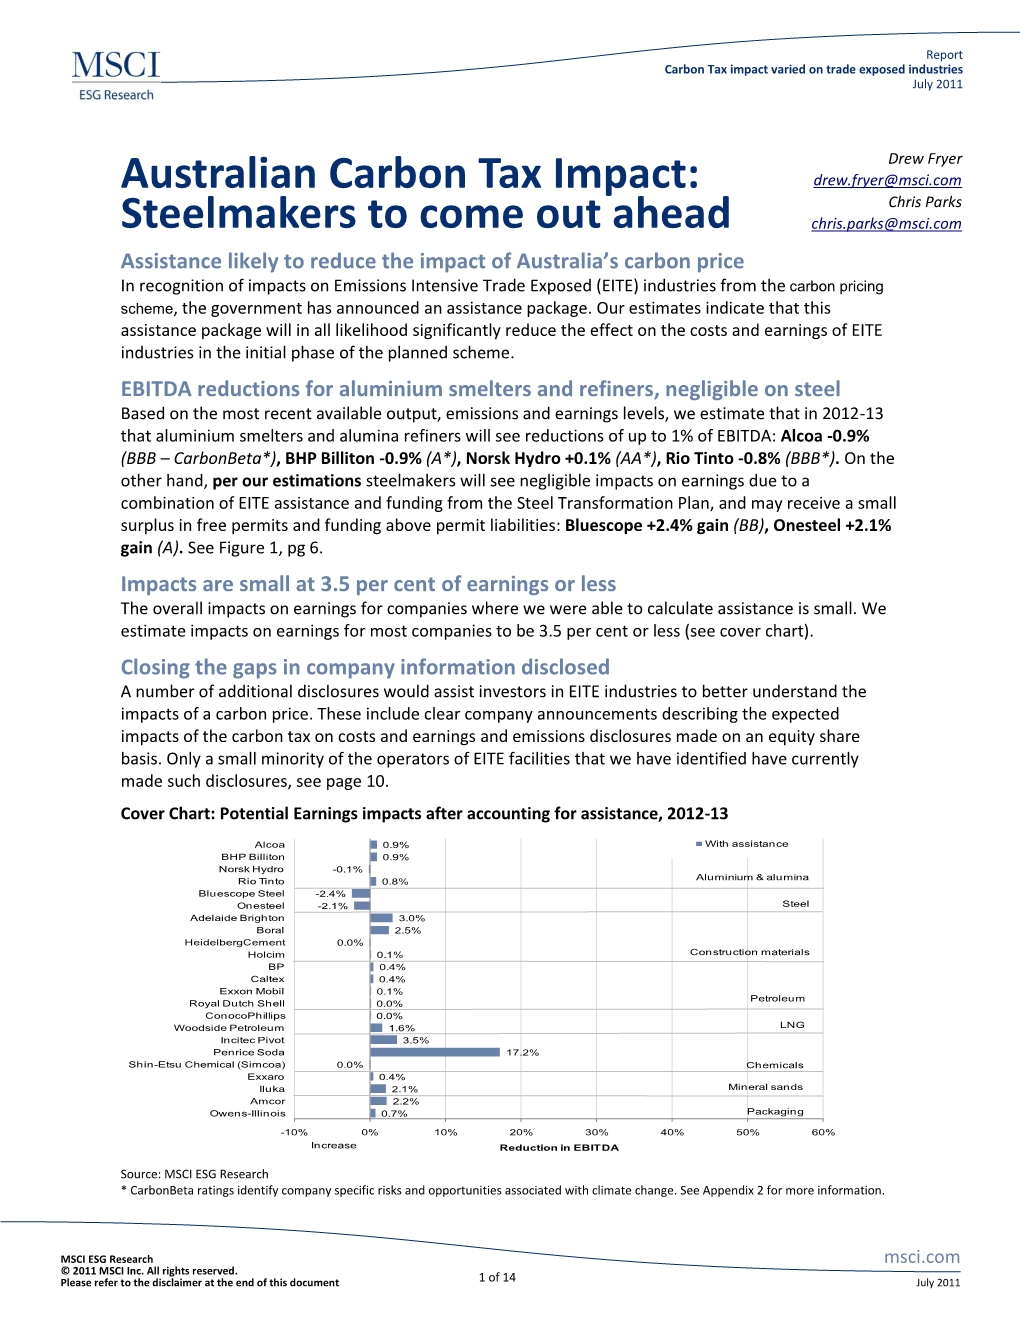 Australian Carbon Tax Impact